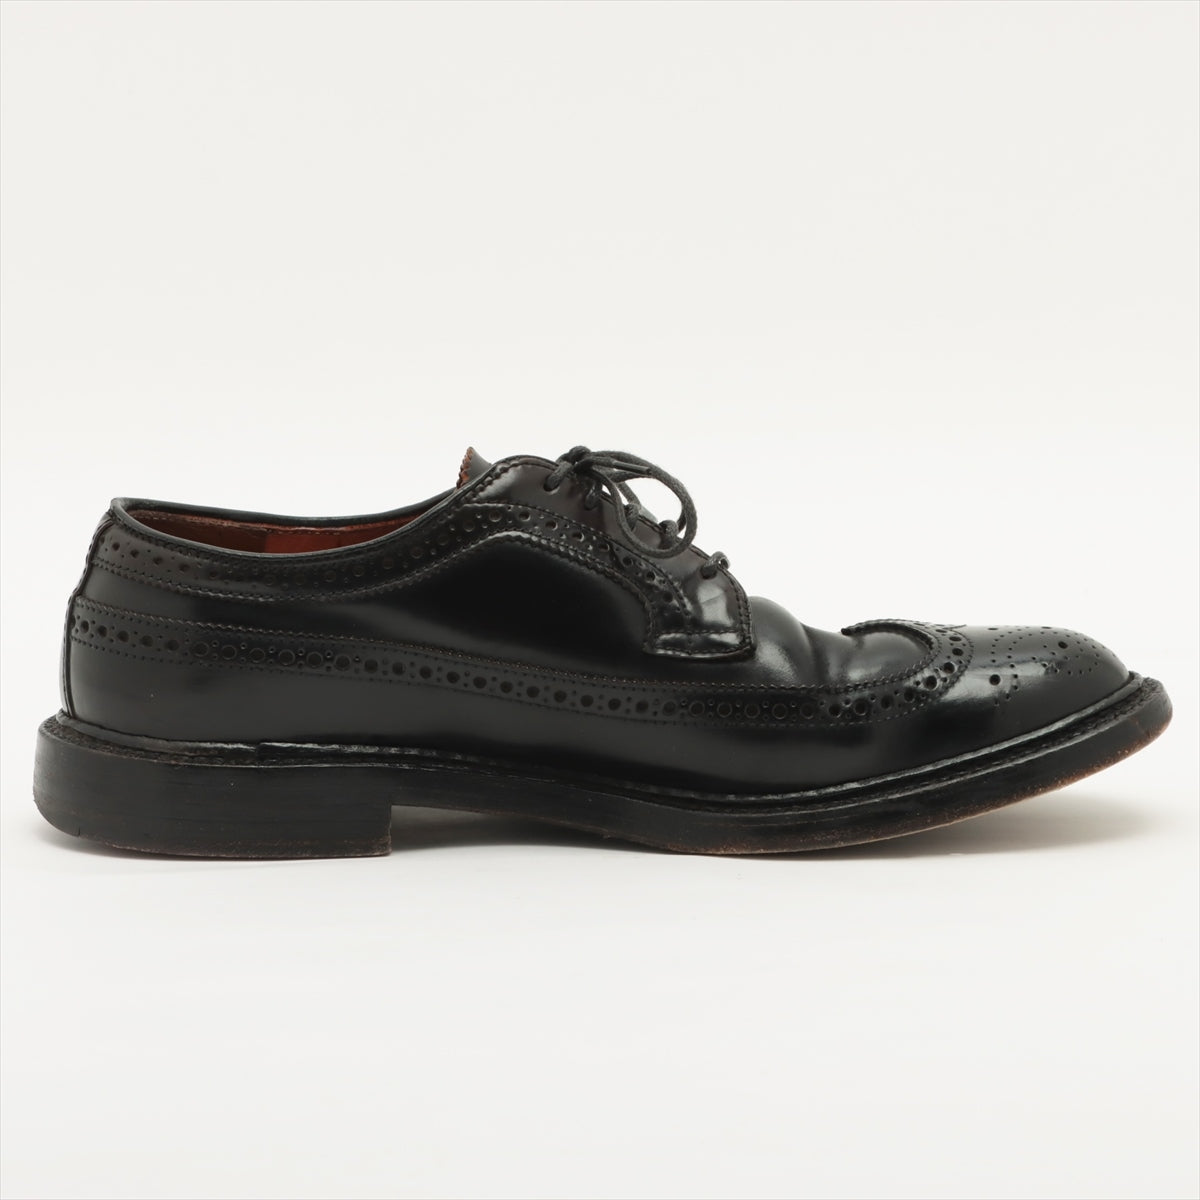 Alden Leather Leather shoes 8 Men's Black 9751